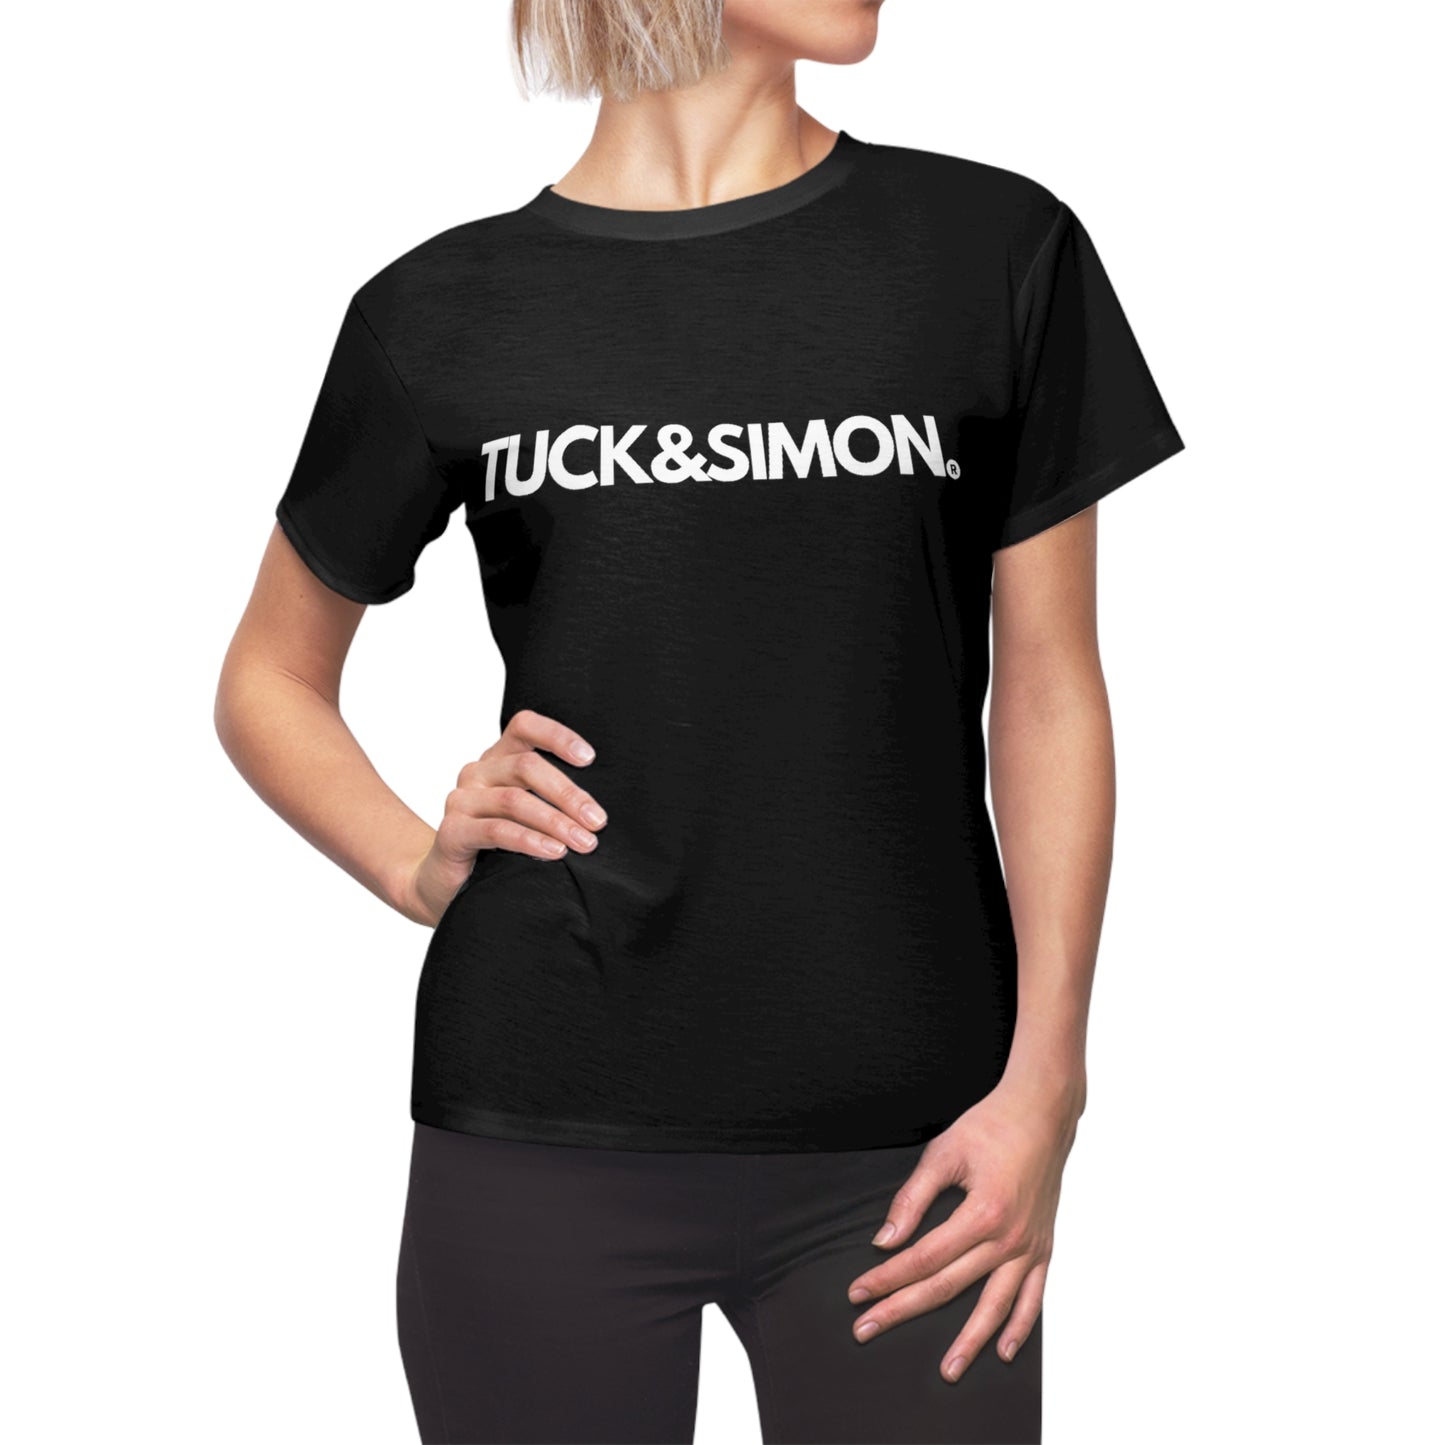 Teen Tuck&Simon Black Fitted T-Shirt